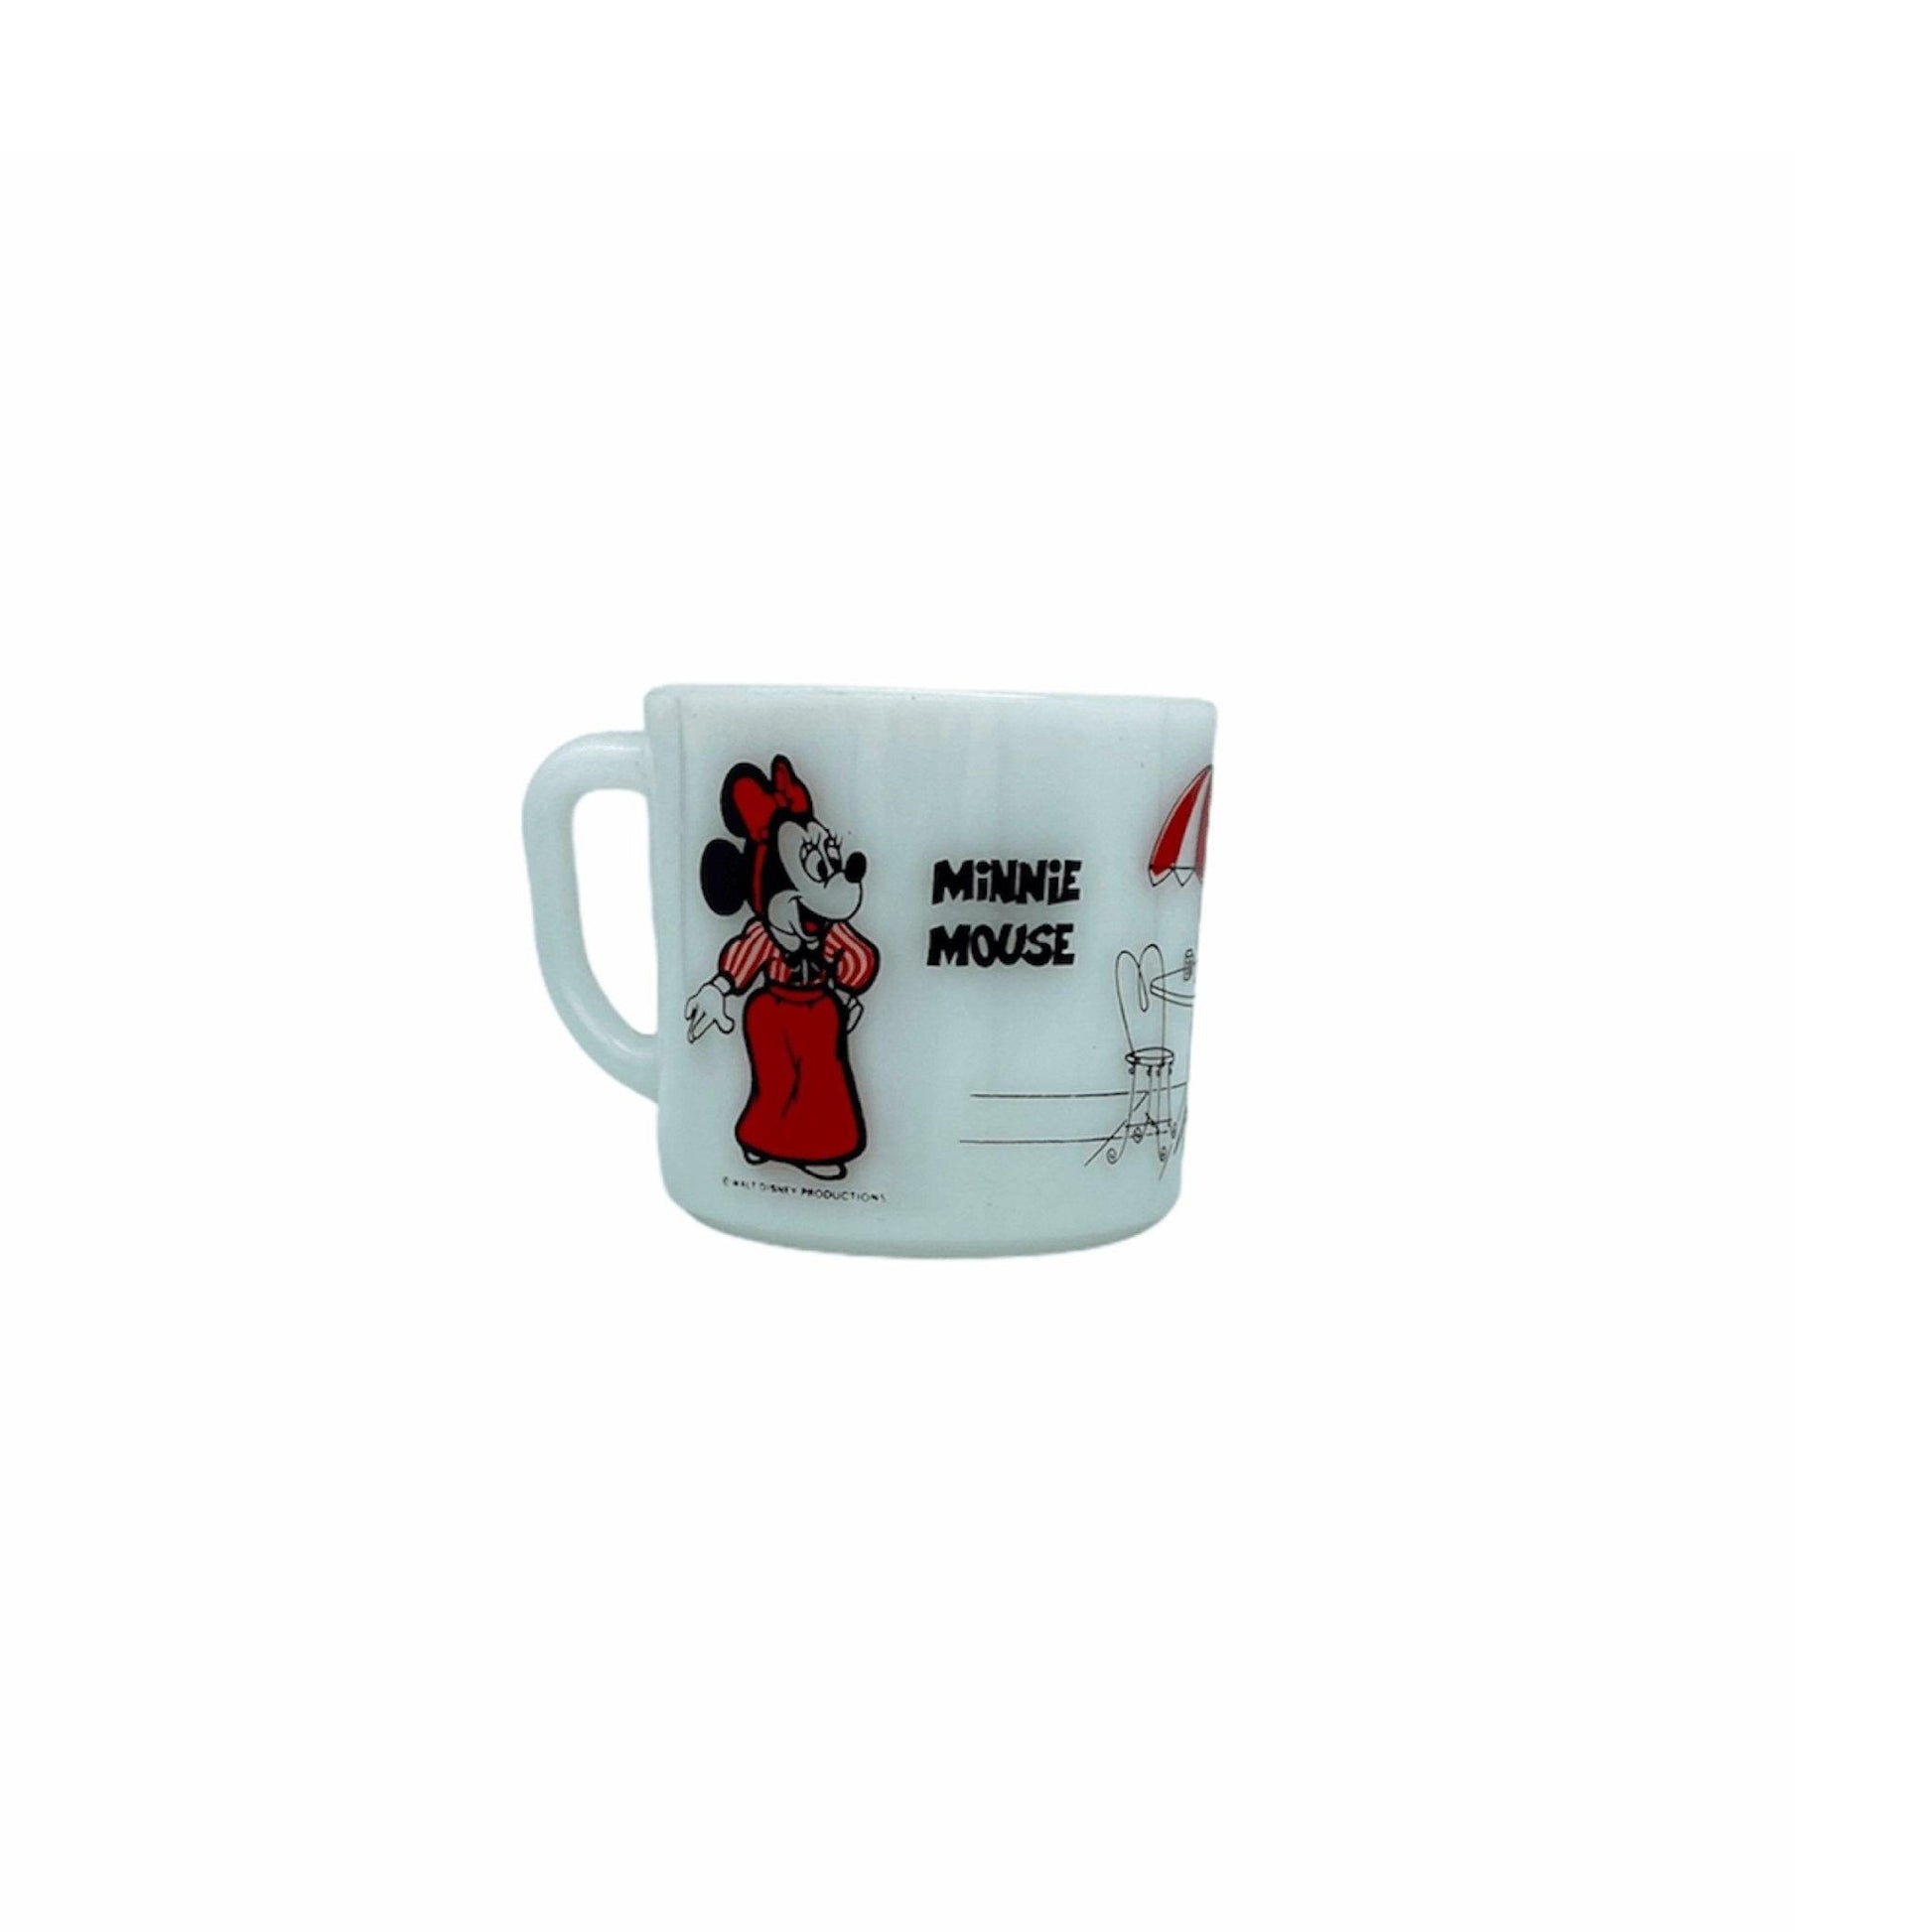 Vintage Mickey Mouse & Minnie Mouse White Milk Glass Coffee Mug